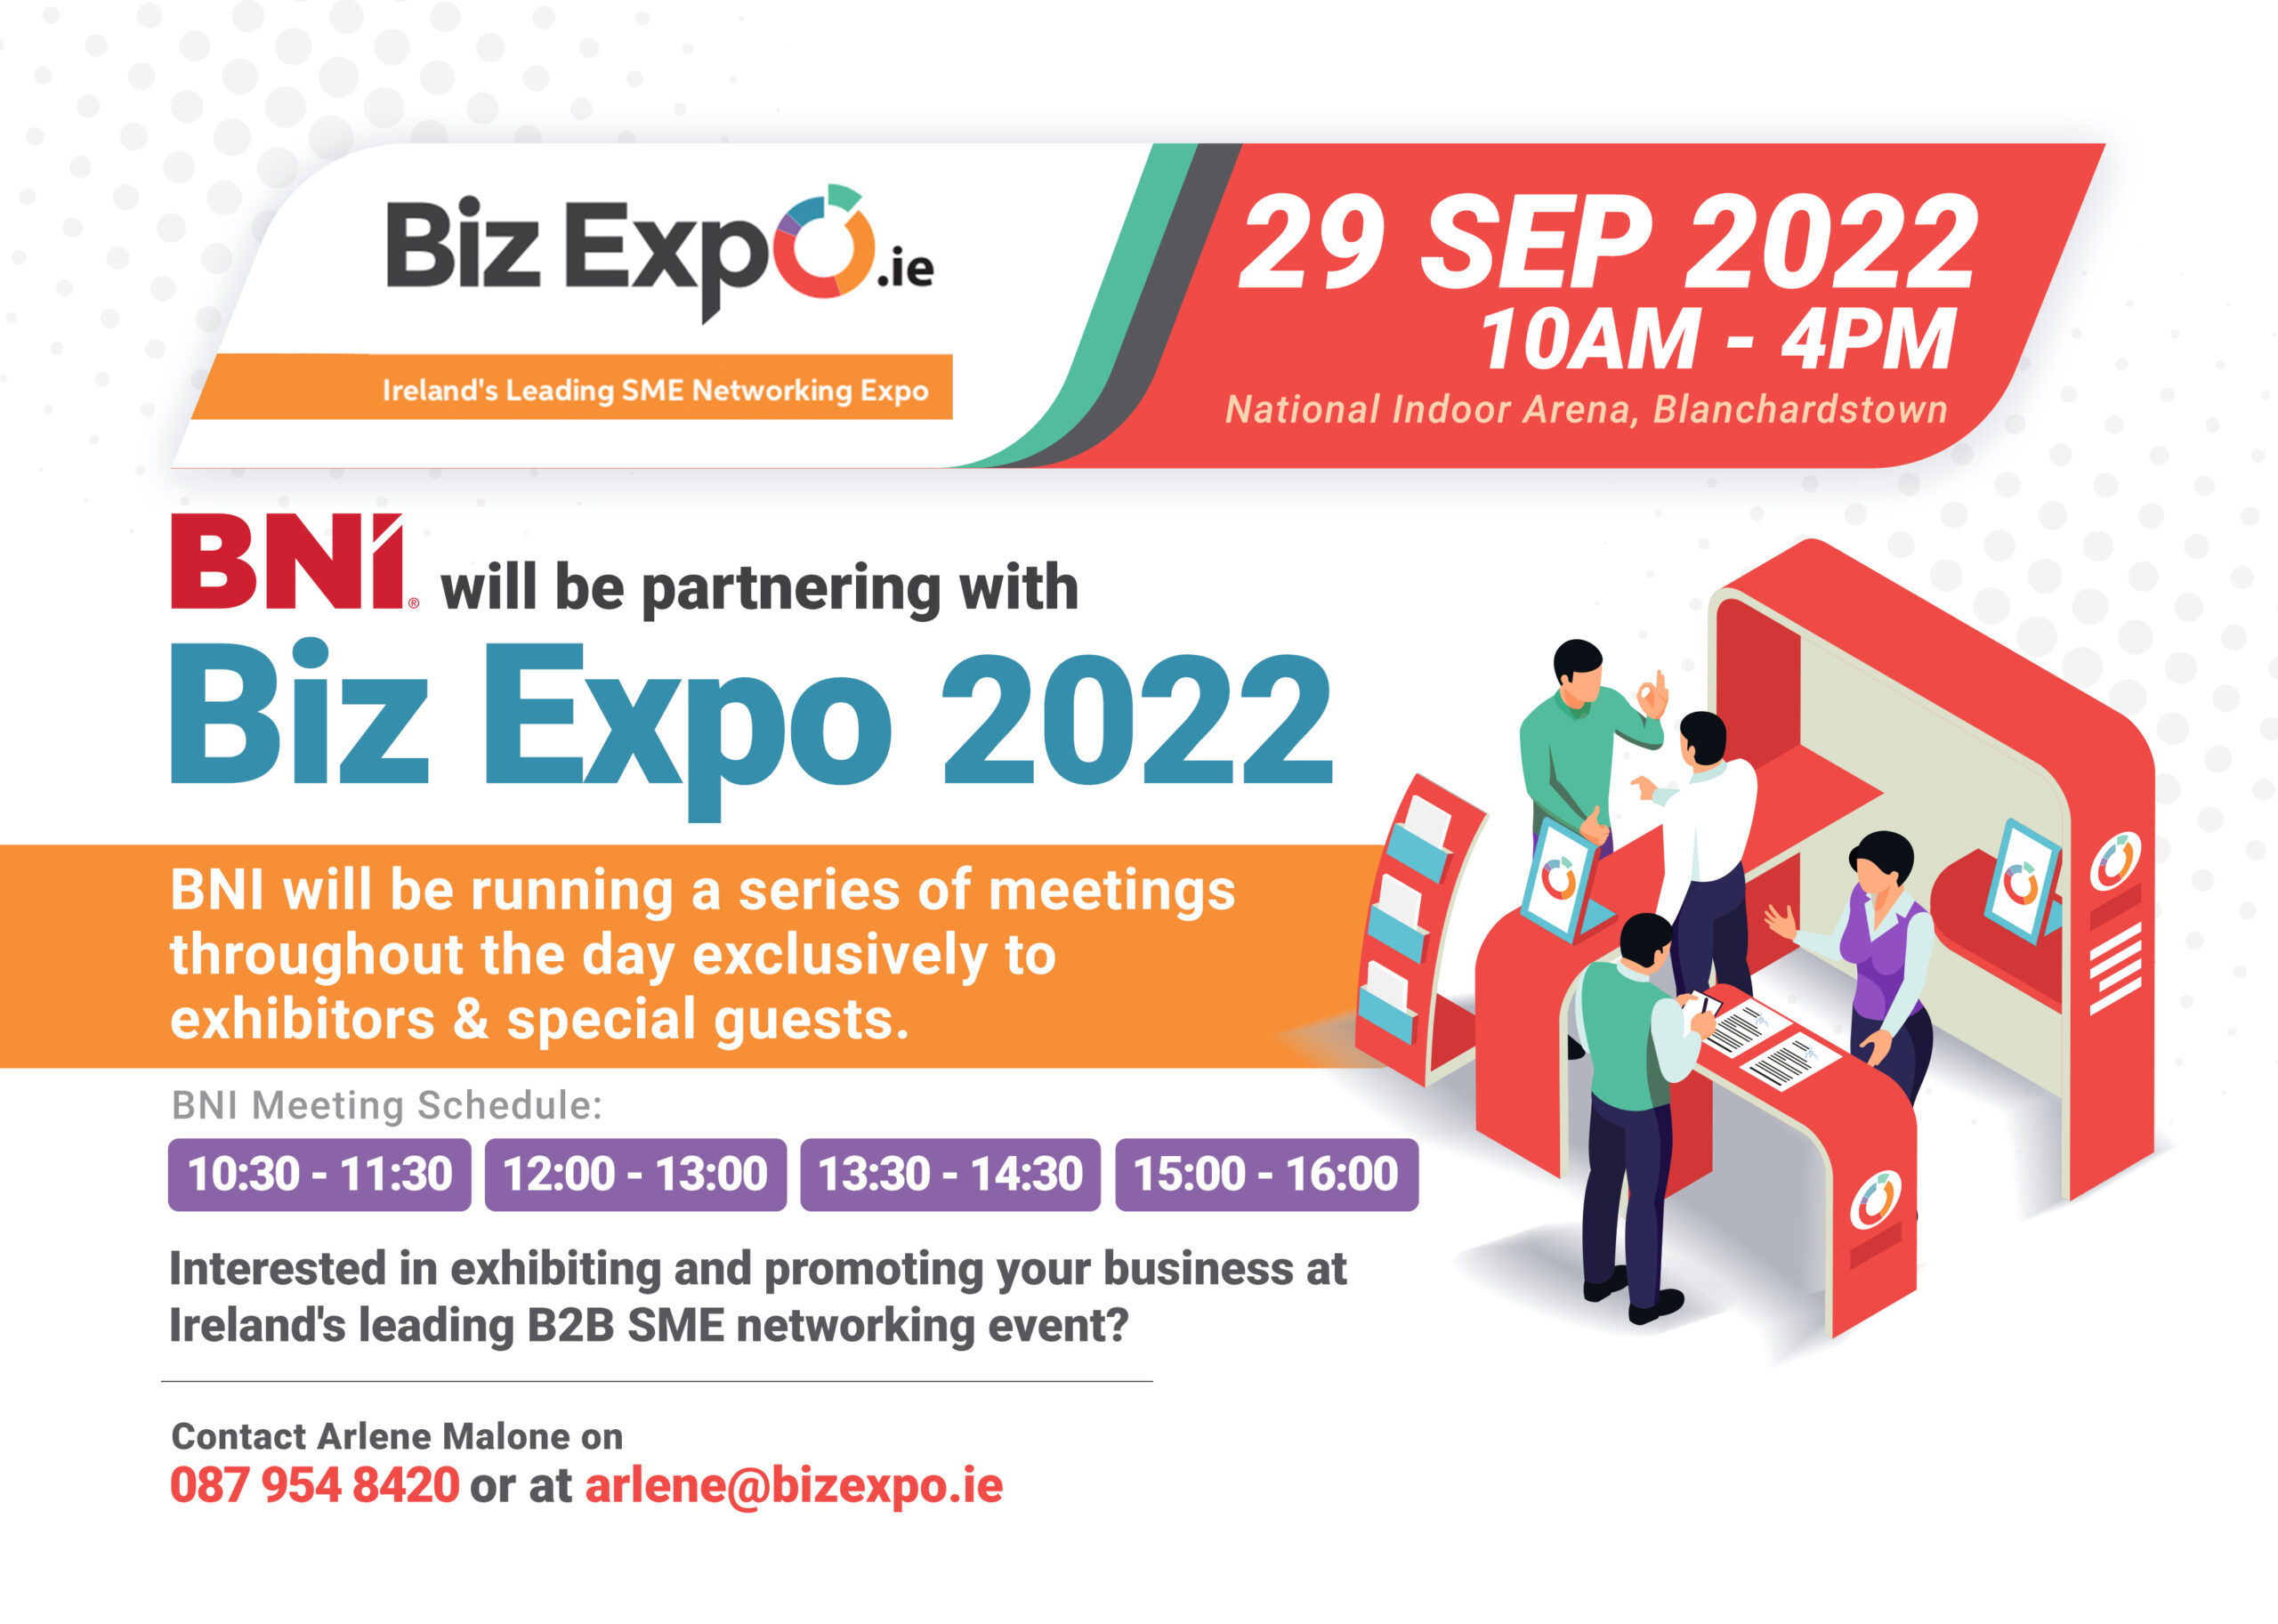 BNI Meetings Bizexpo.ie Biz Expo Ireland